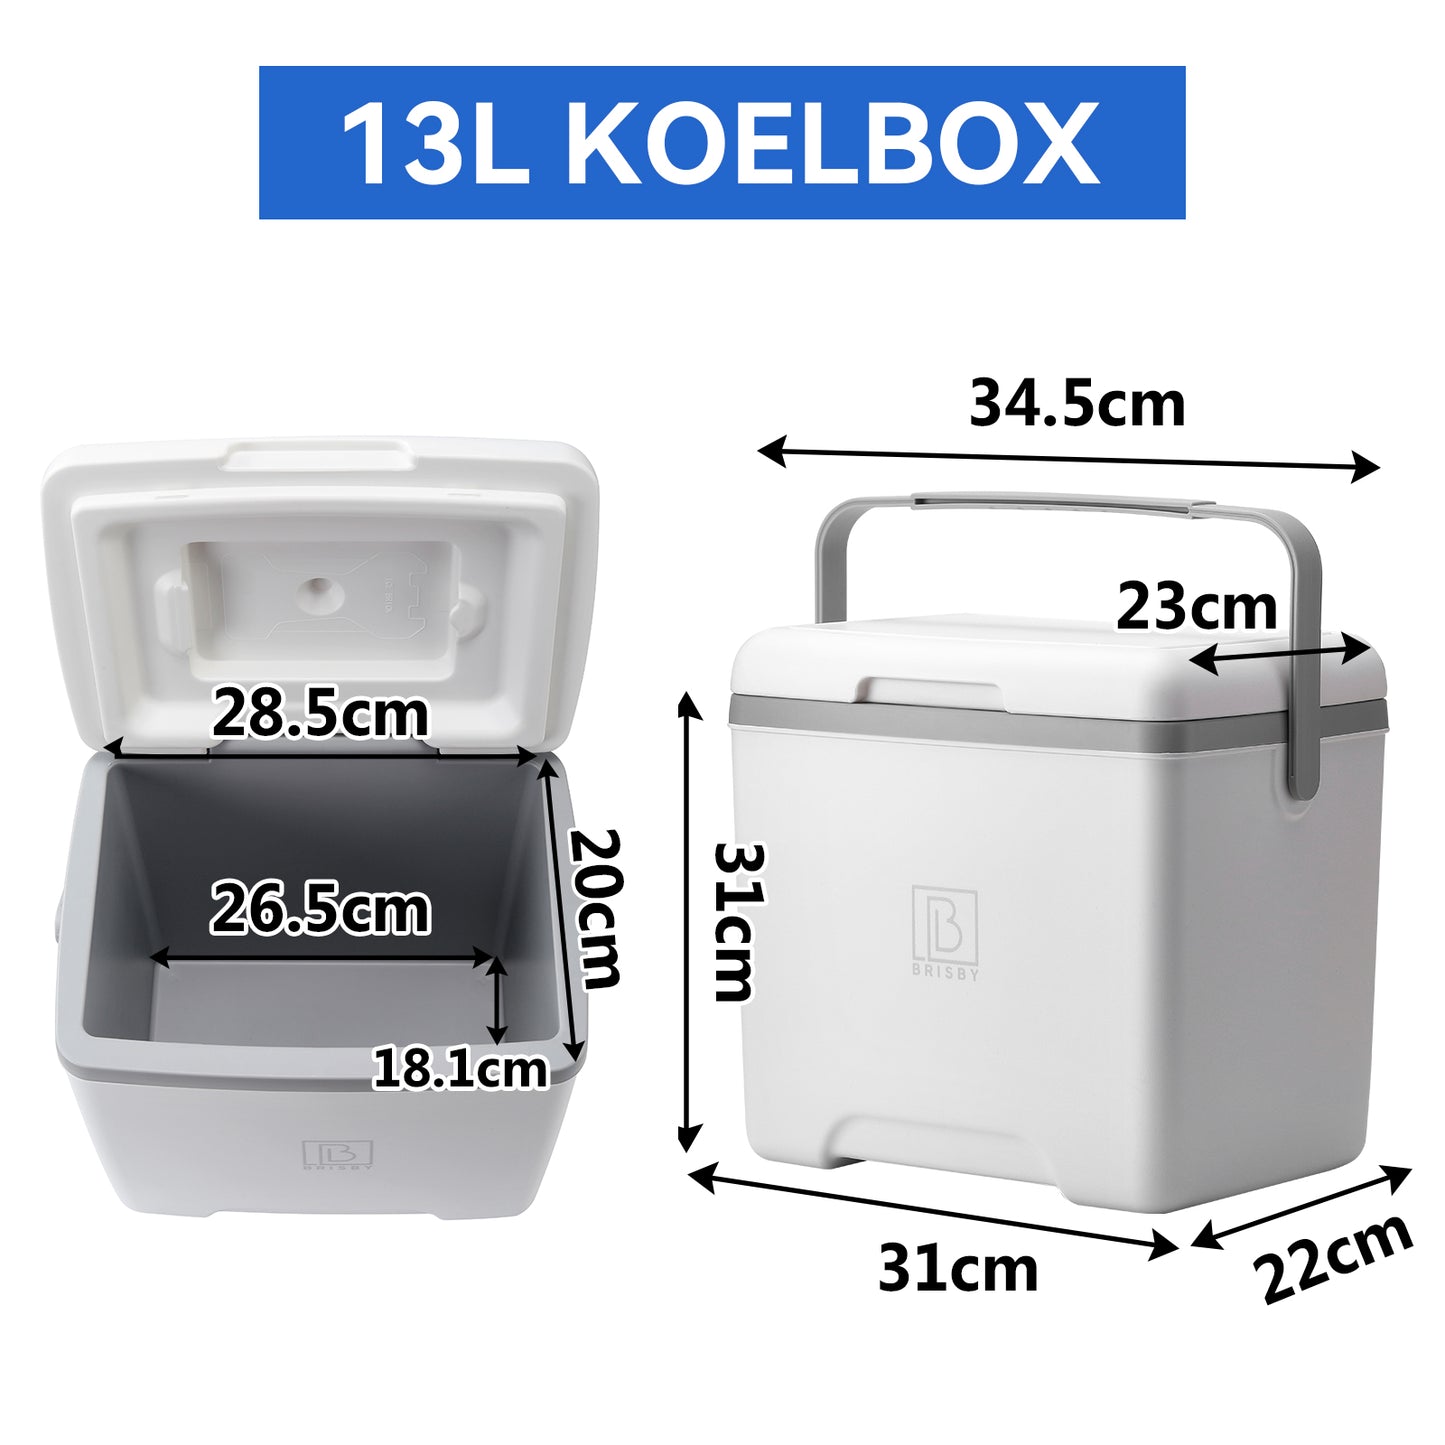 Brisby Koelbox 13L Wit - Incl. 2 koelelementen van 450ml